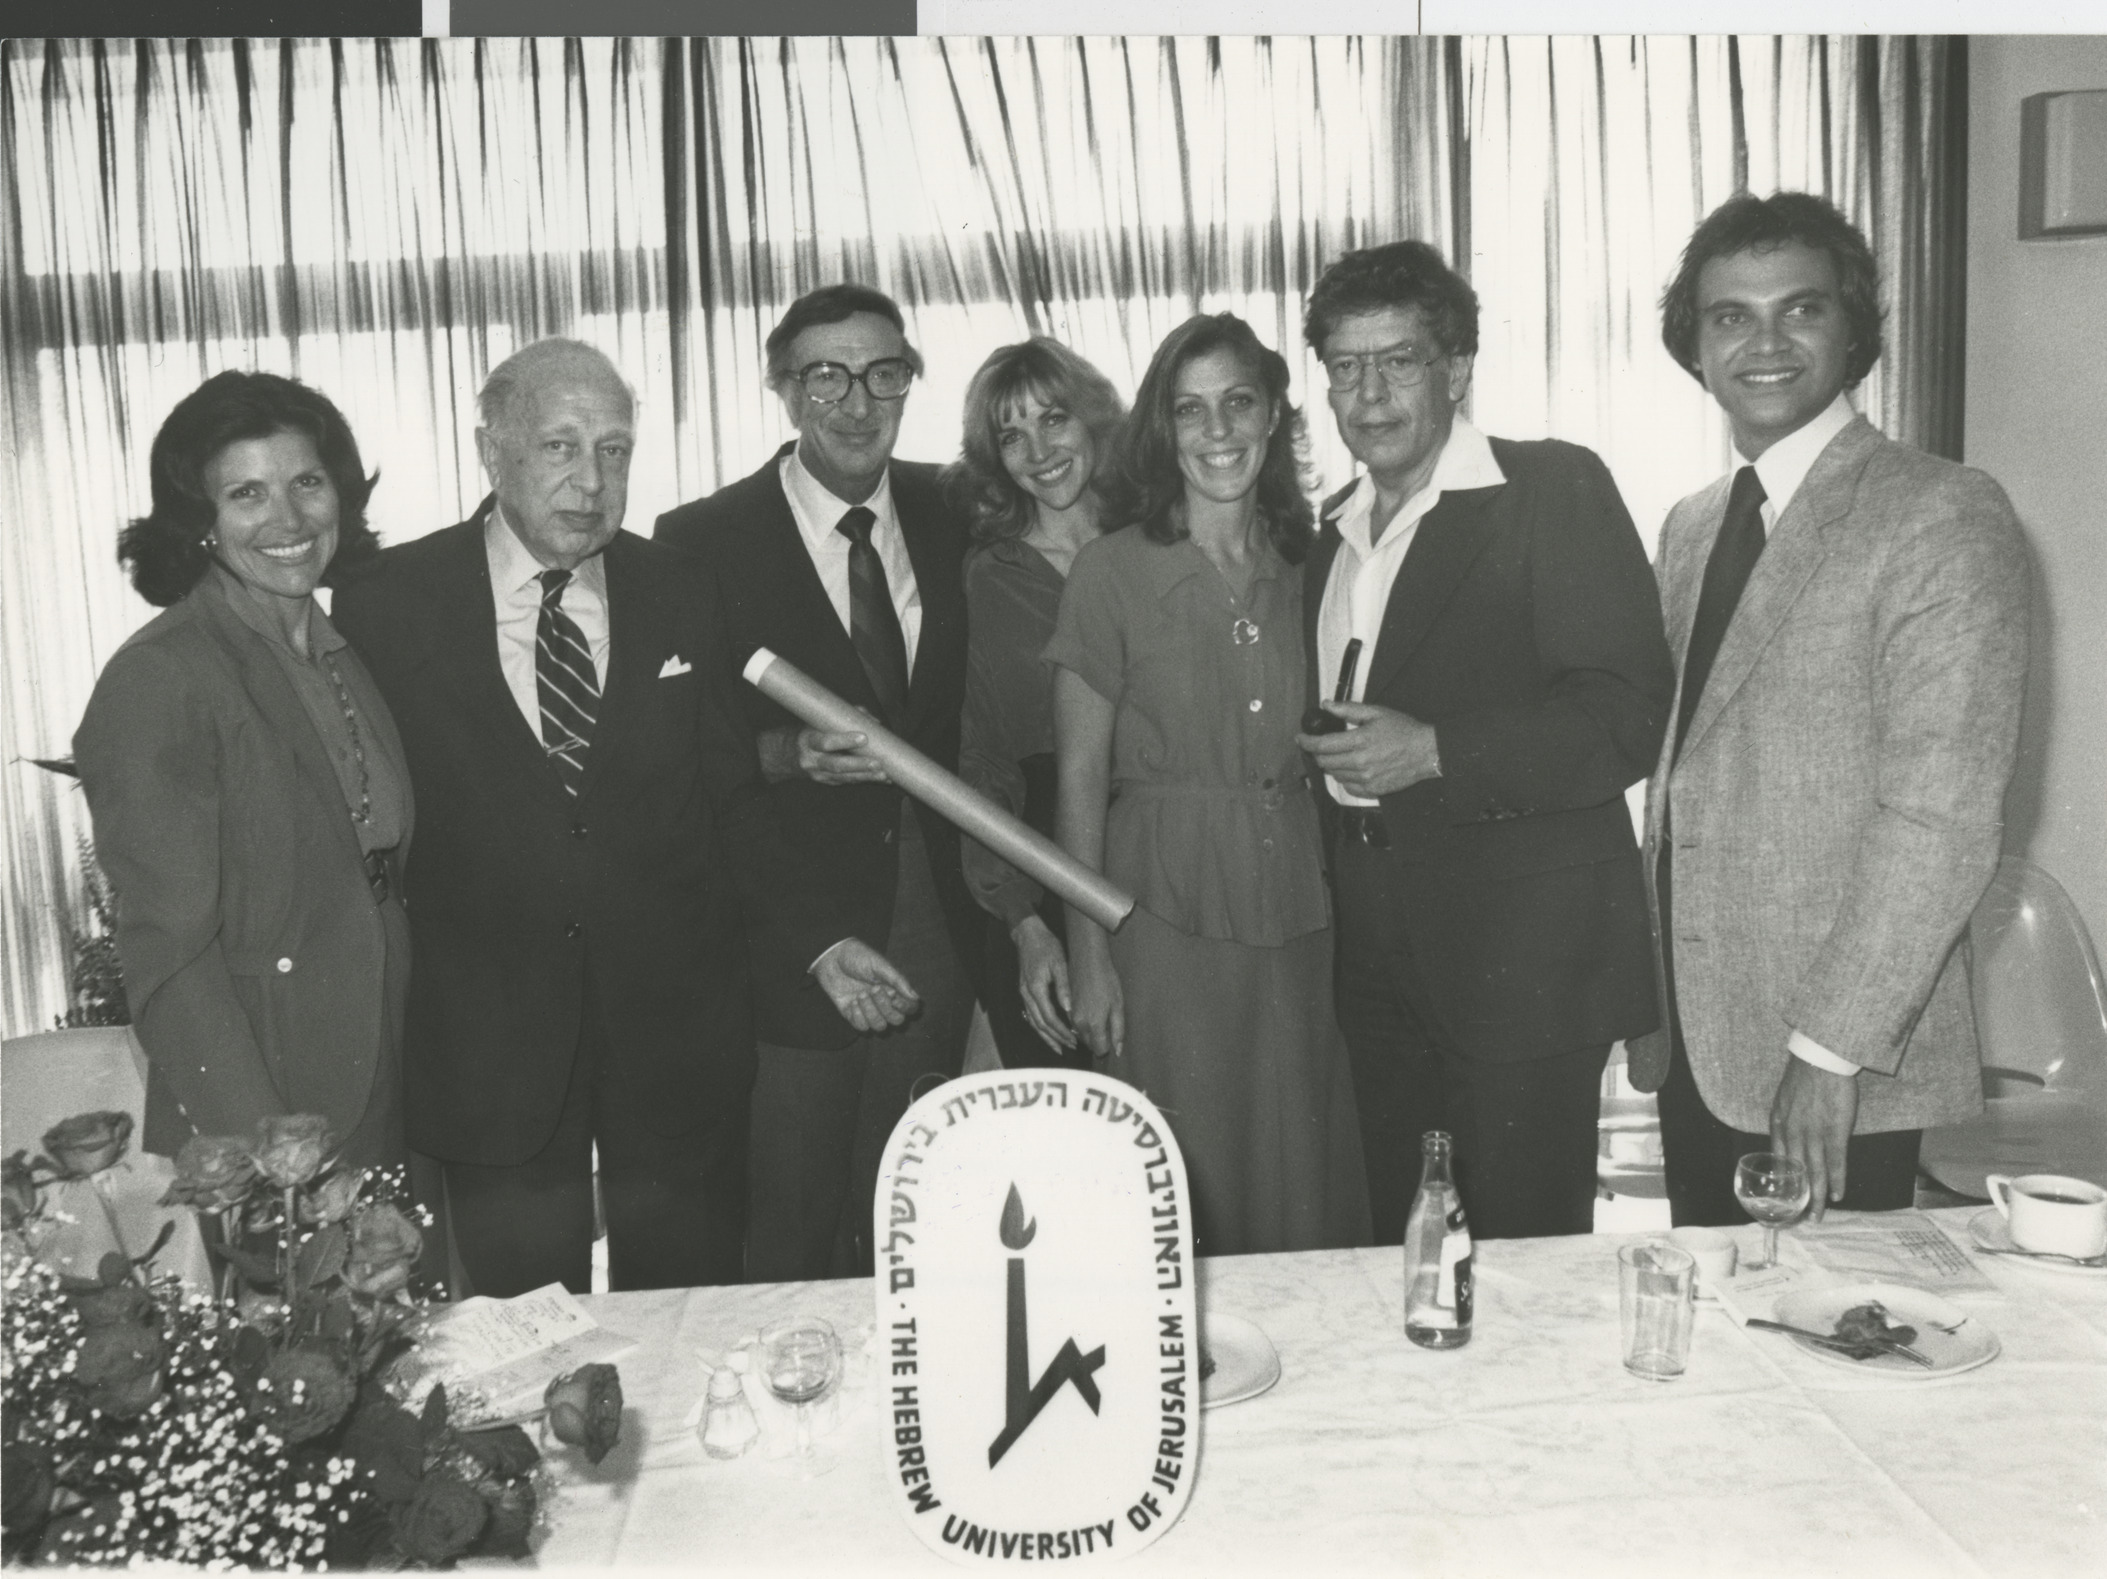 Photograph at dinner honoring Mack family of Las Vegas, April 1979